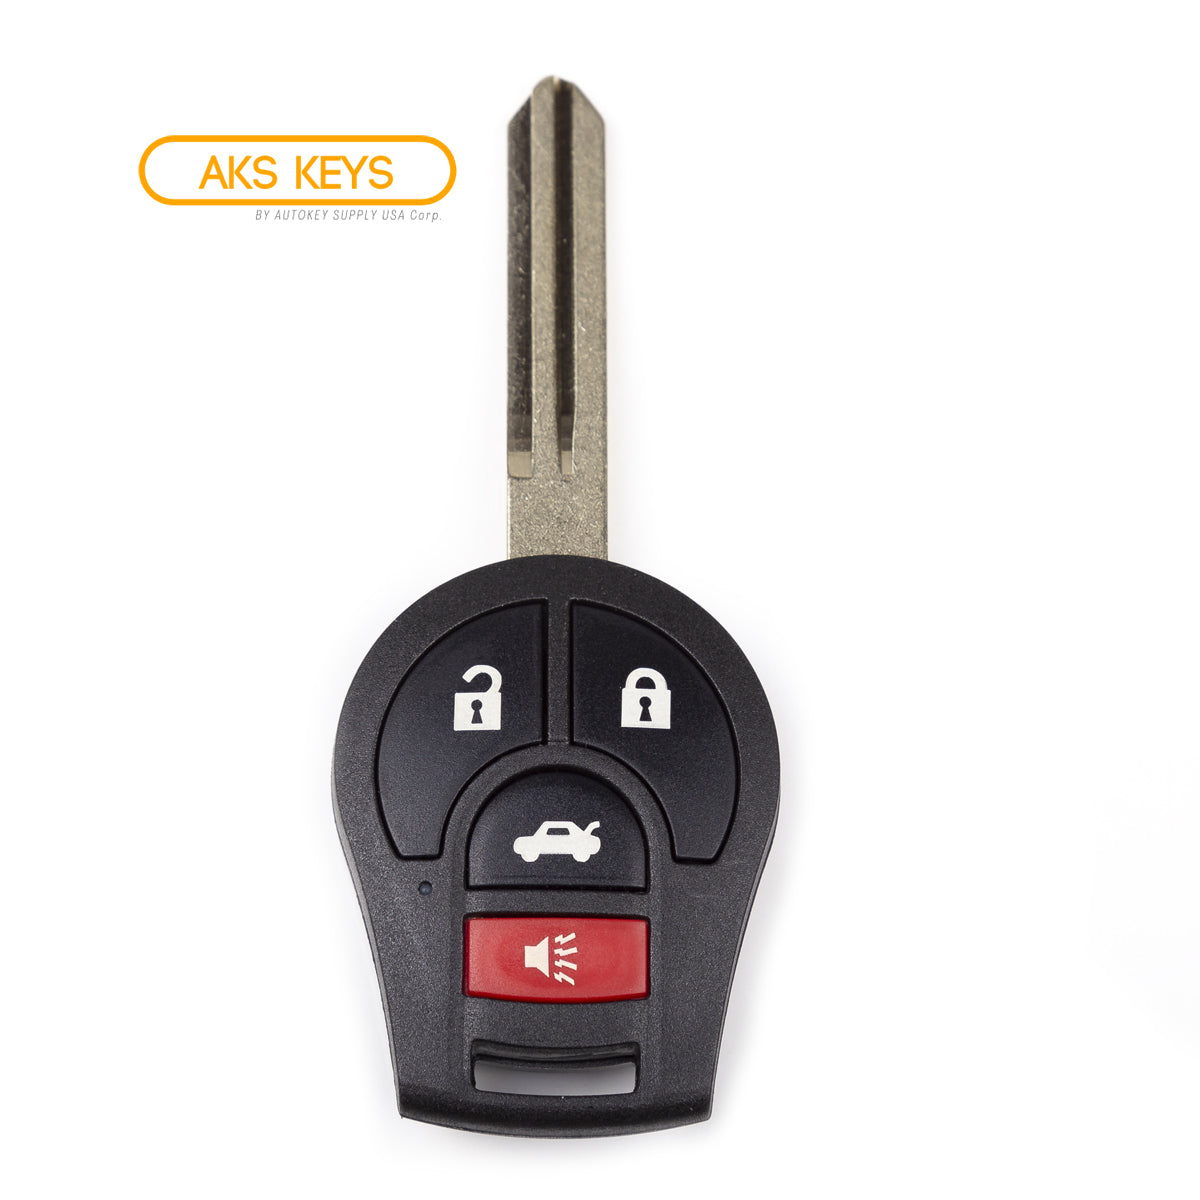 2007 Nissan Murano Key Fob - Aftermarket - 4 Buttons Fob FCC# CWTWB1U751 - ID46 Chip